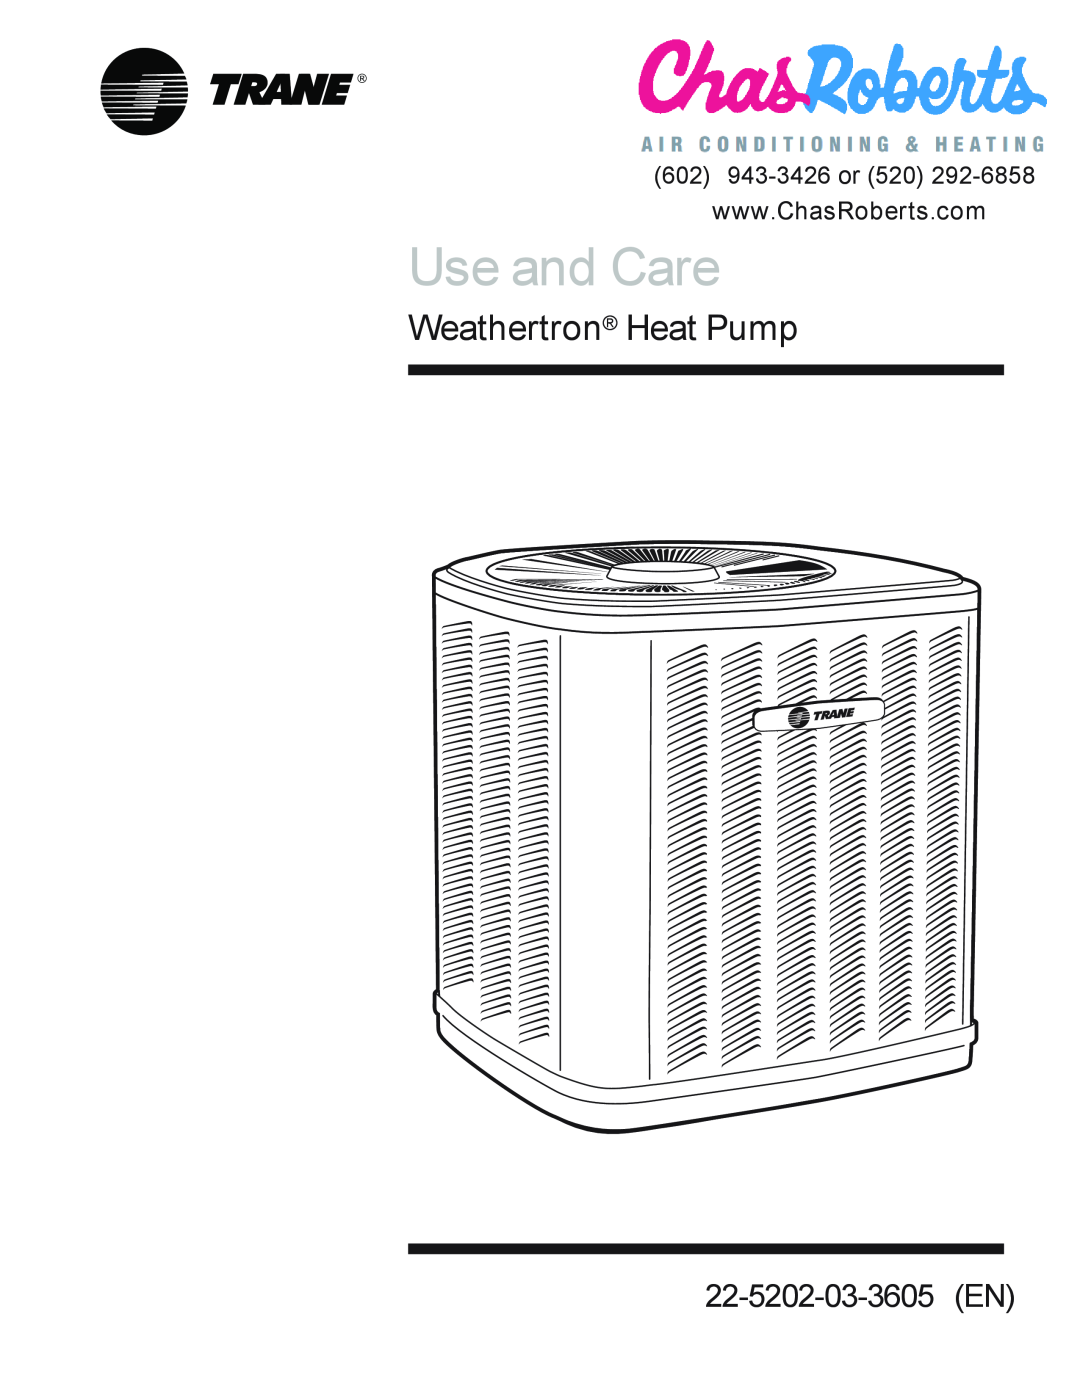 Trane manual Weathertron Heat Pump, Use and Care, 22-5202-03-3605EN 